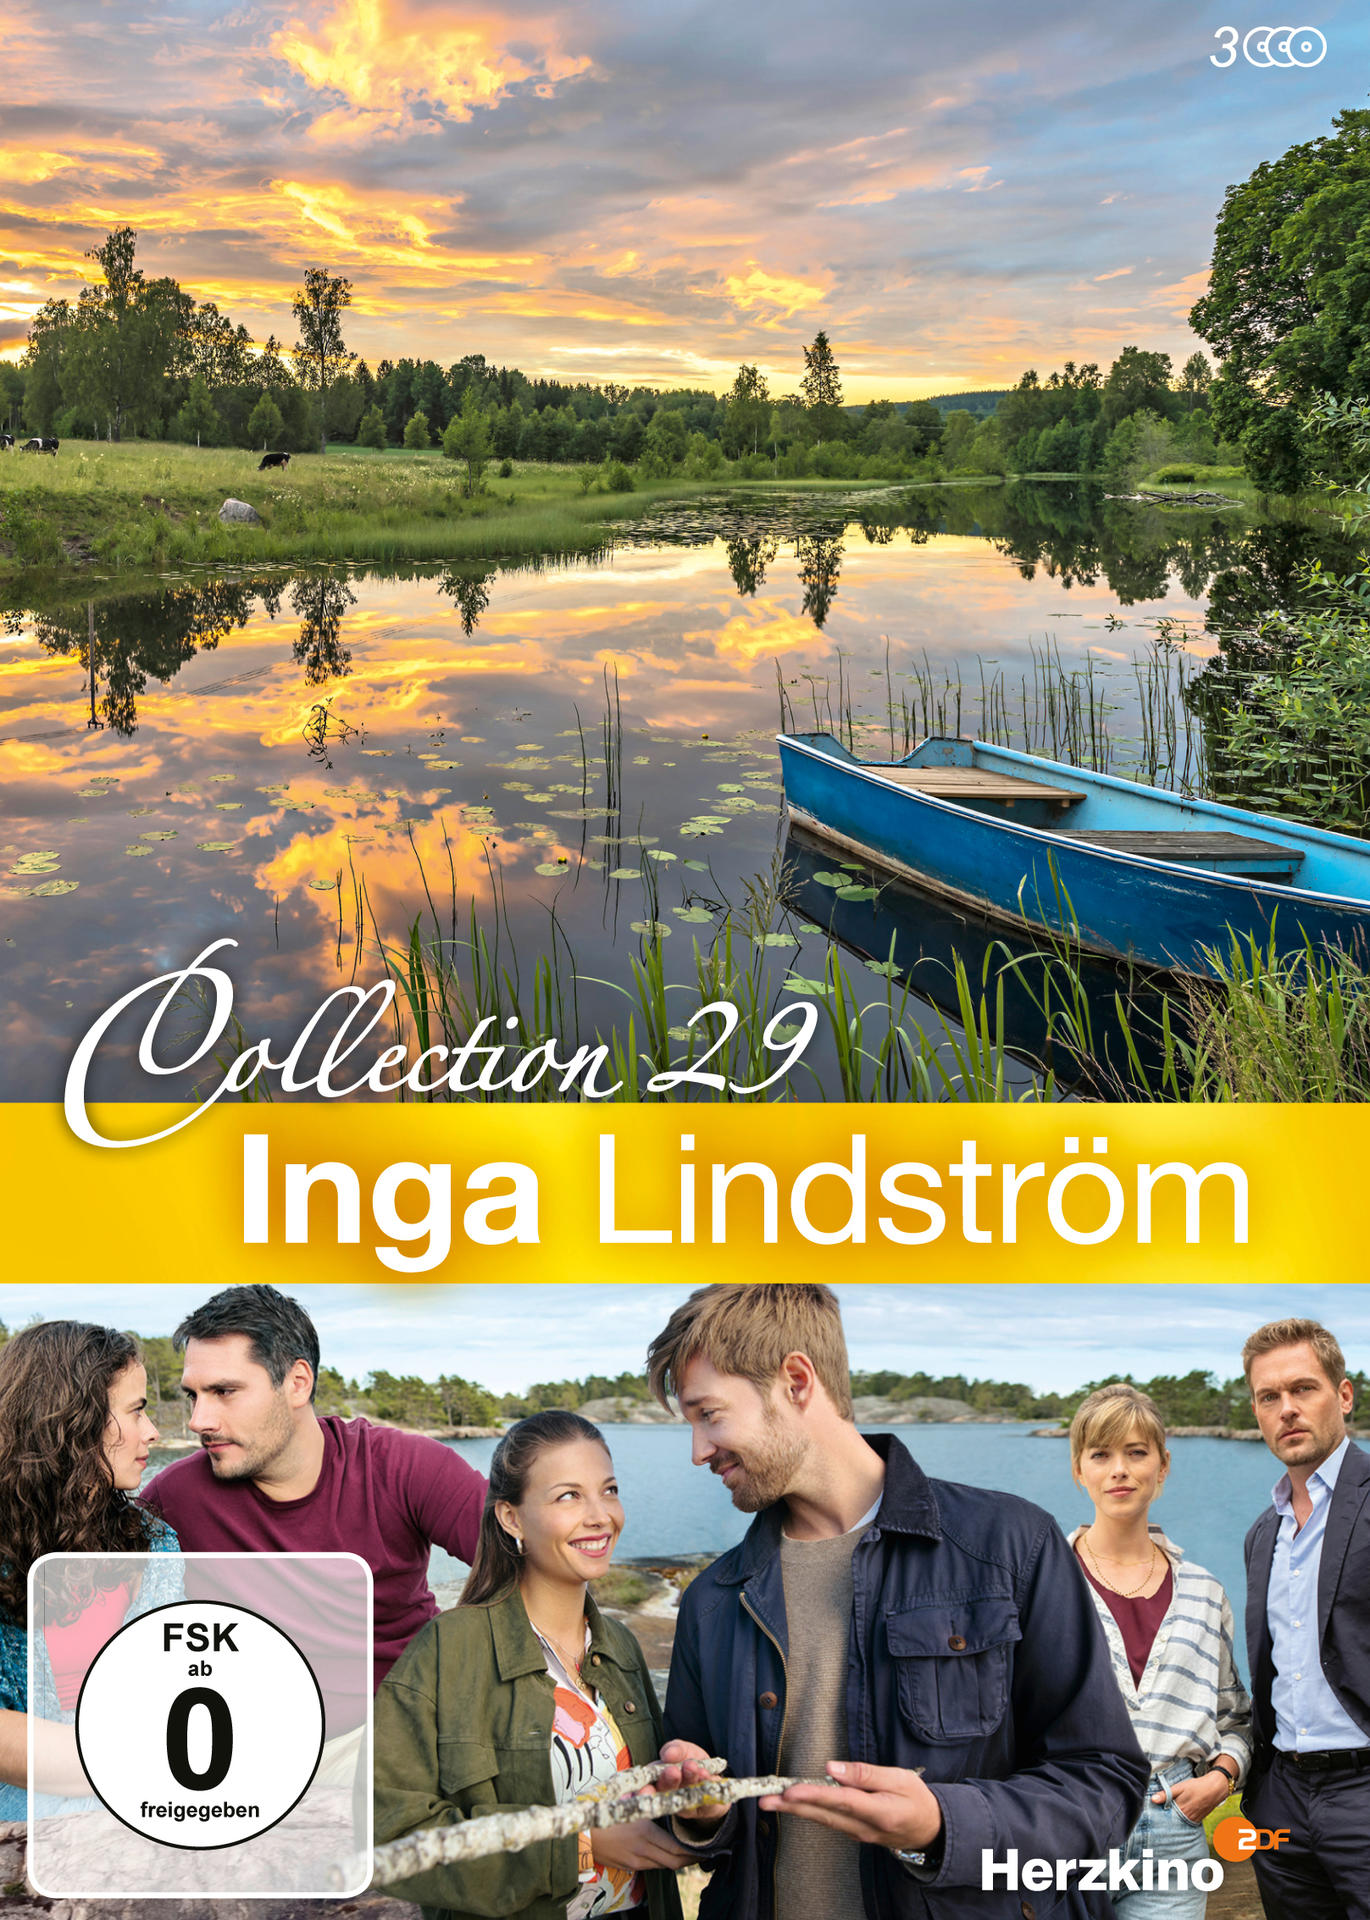 Inga Lindström Collection DVD 29